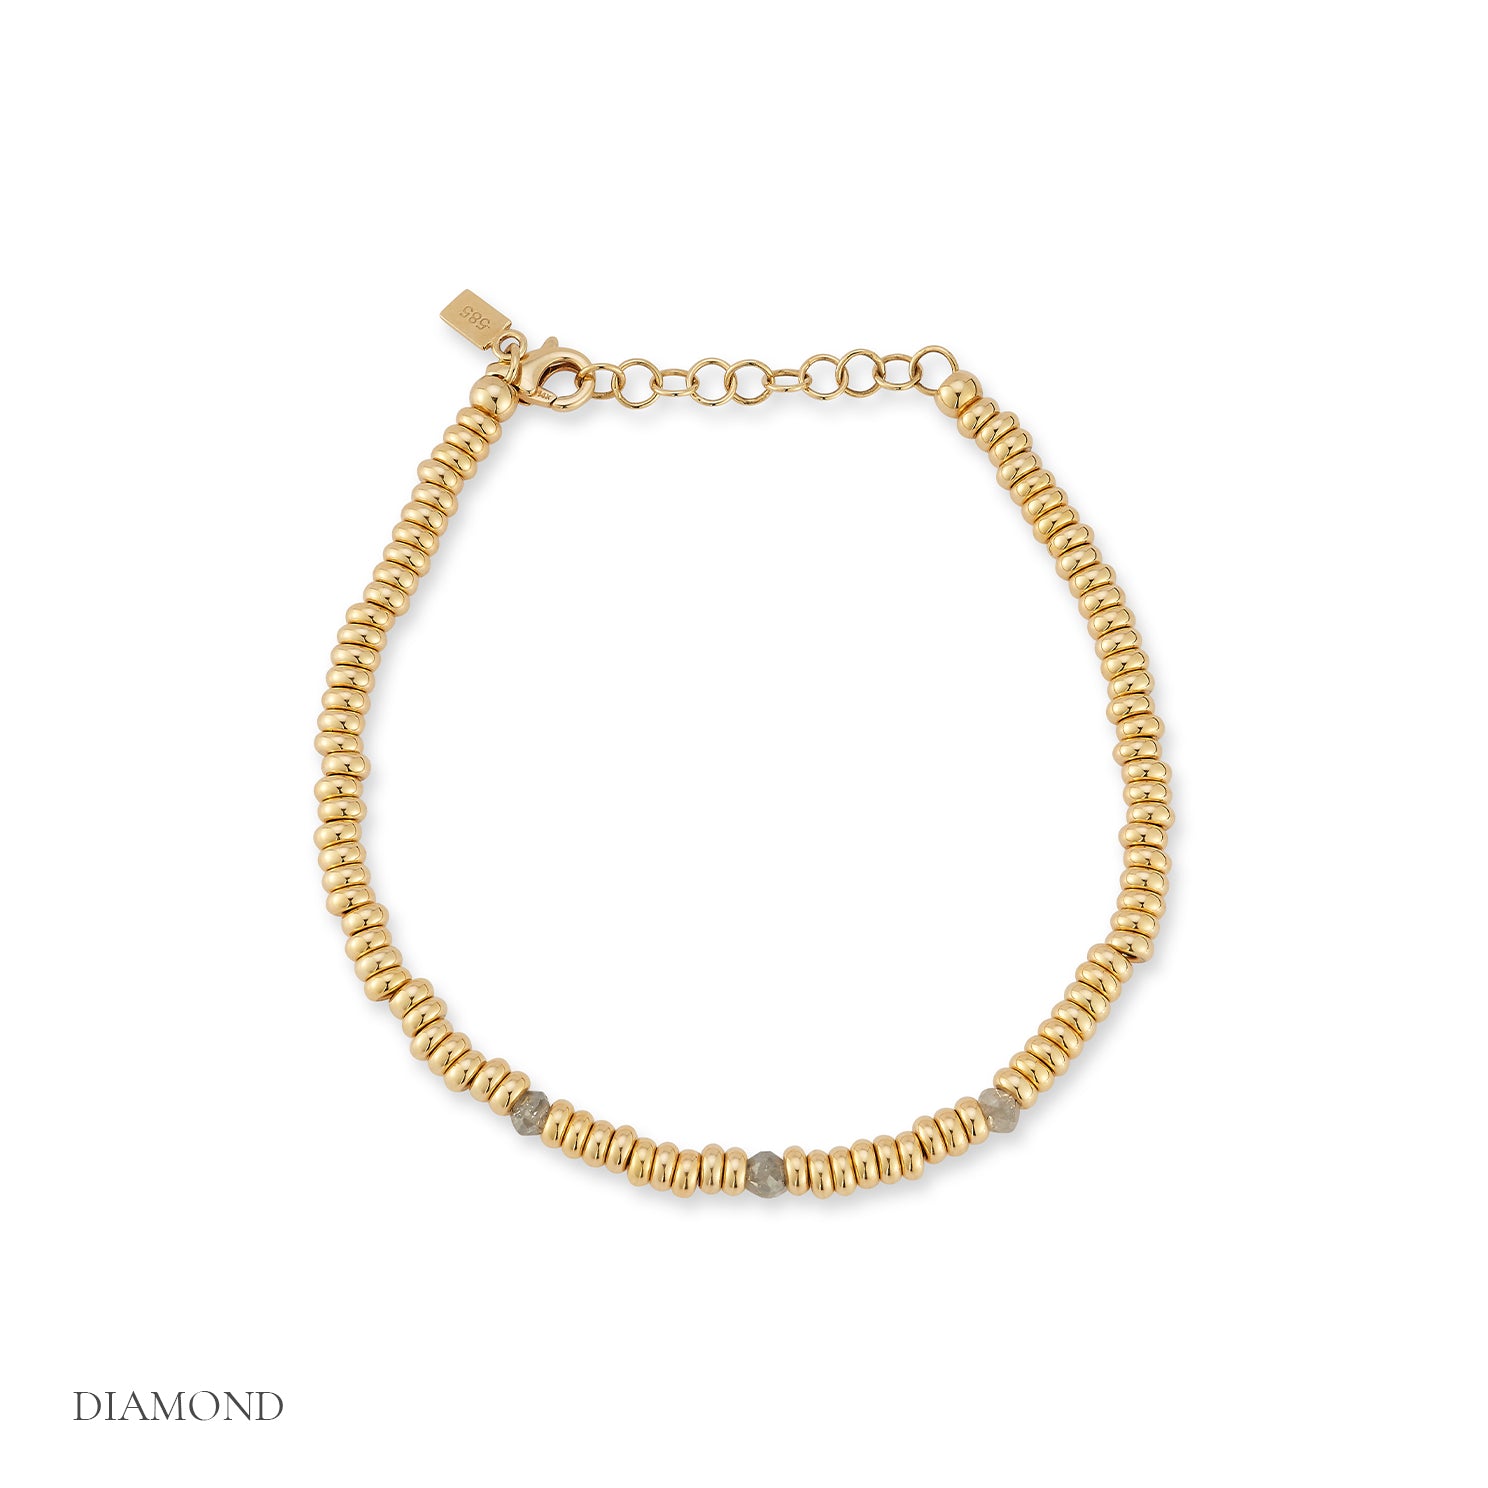 Birthstone Bead Bracelet In Diamond in 14k yellow gold